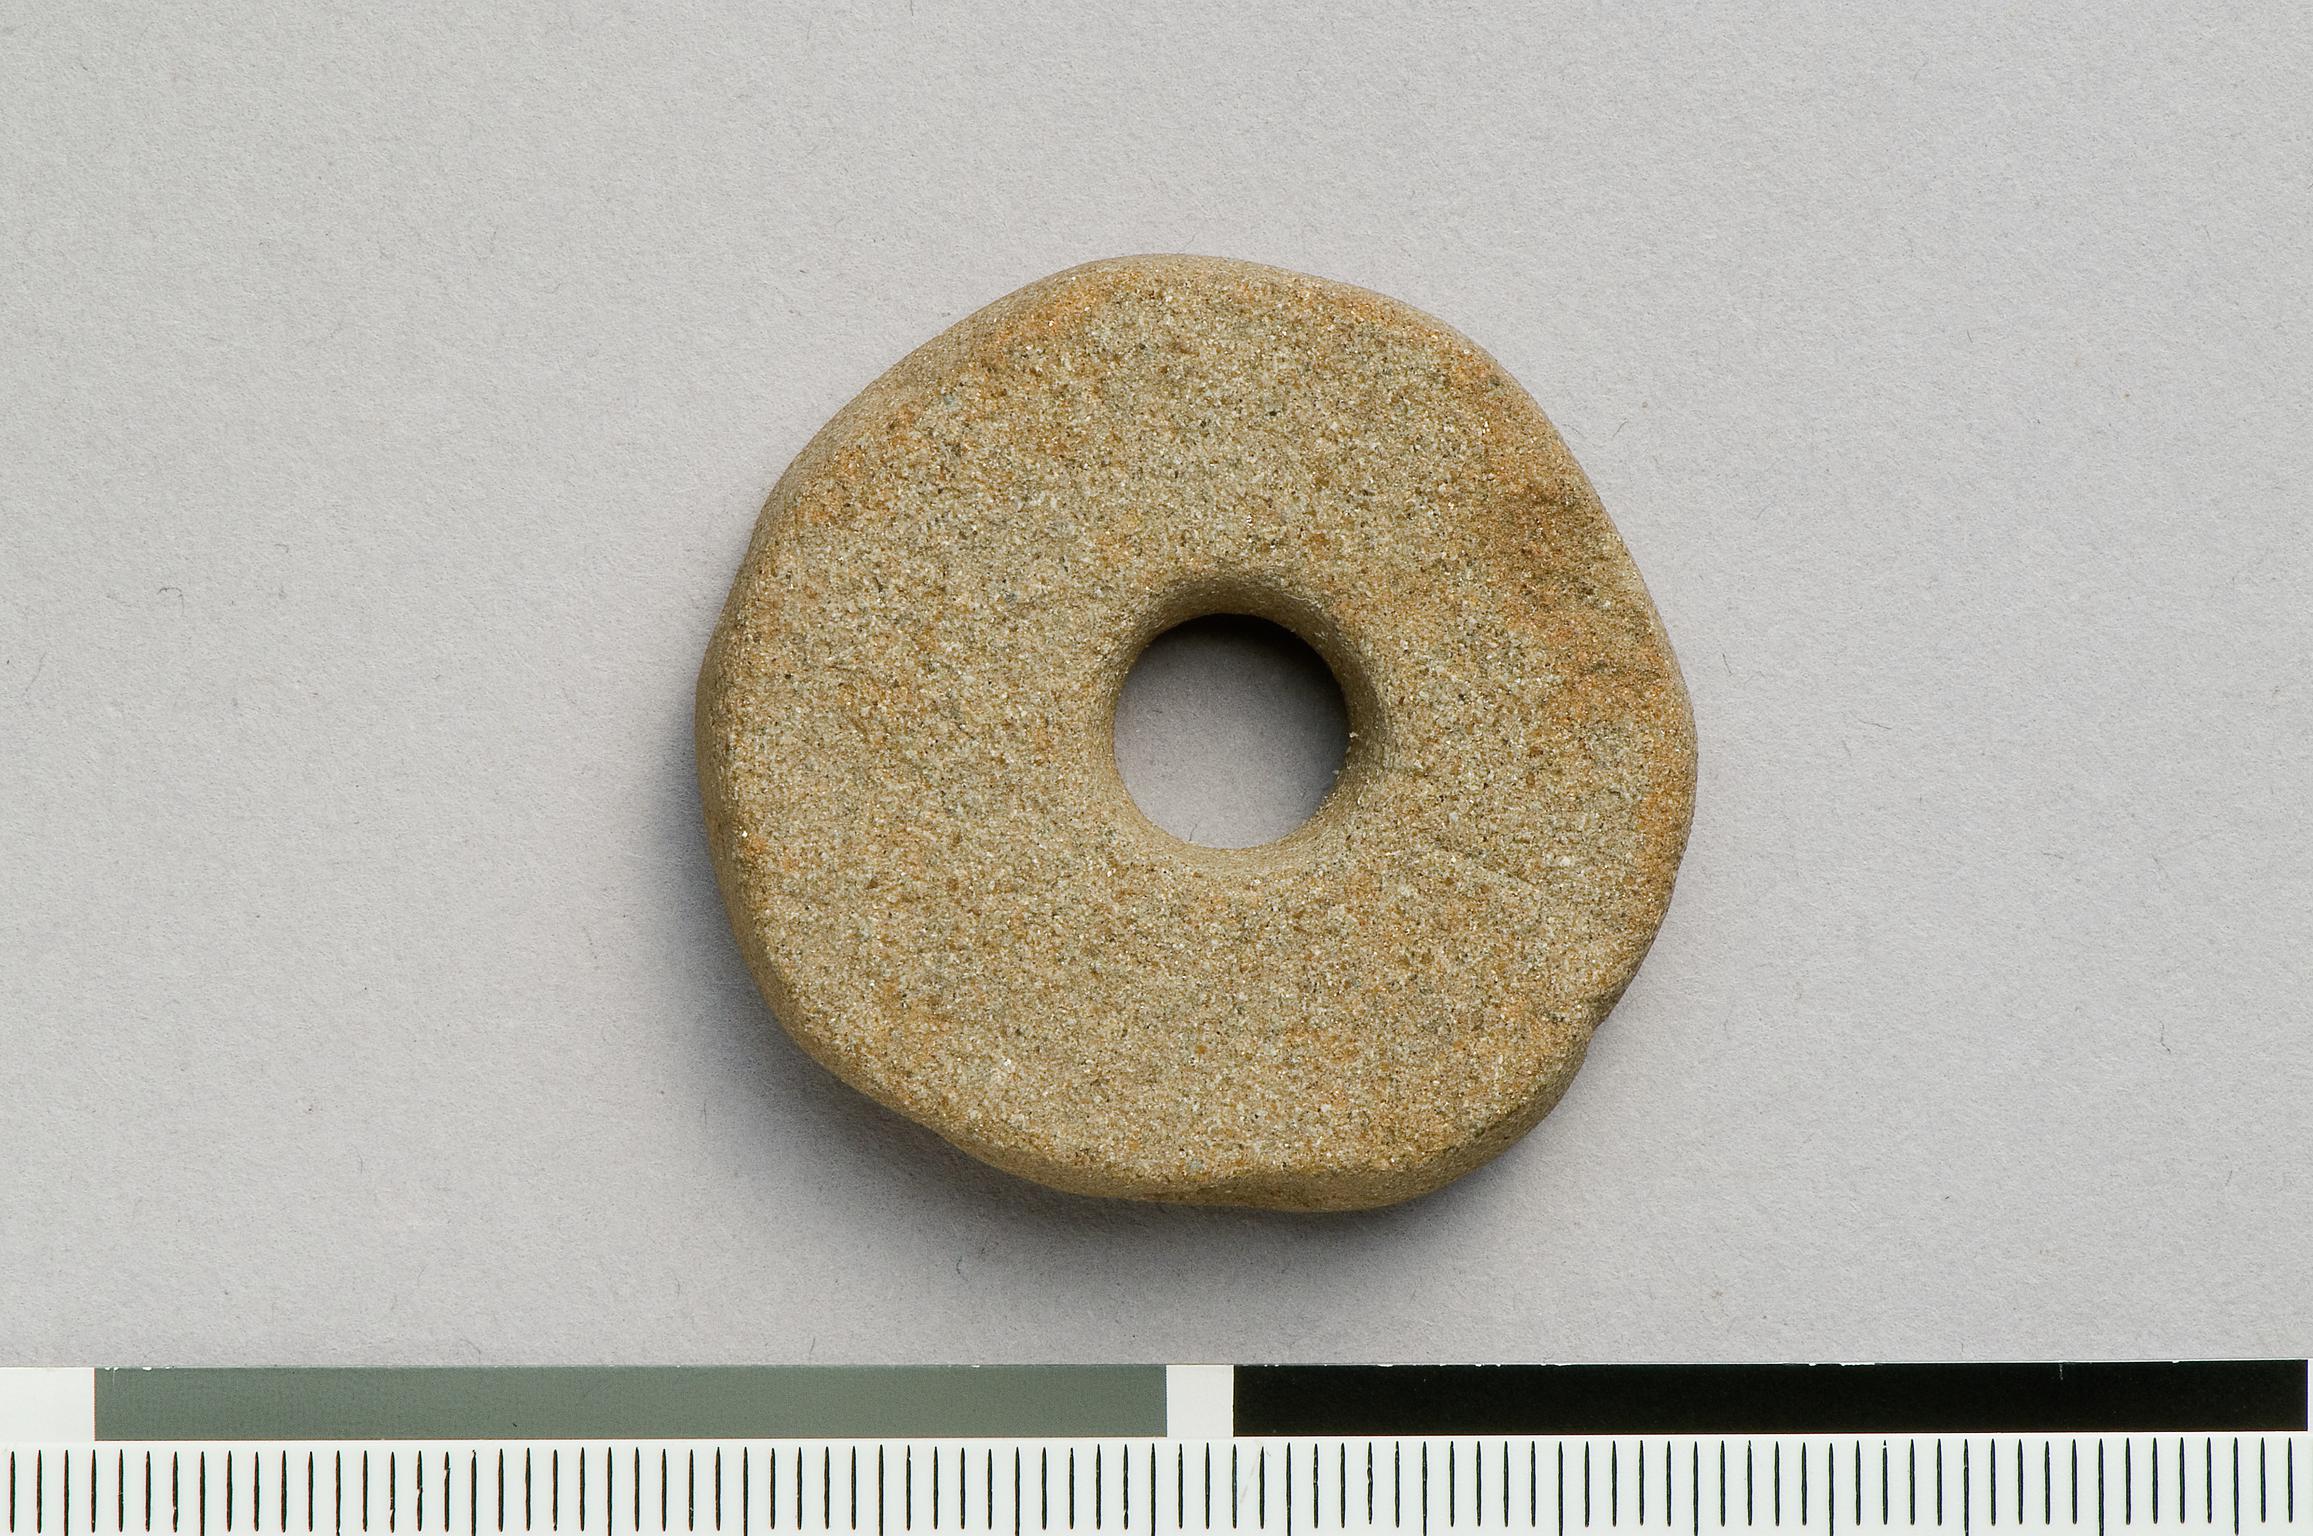 Roman stone spindle whorl